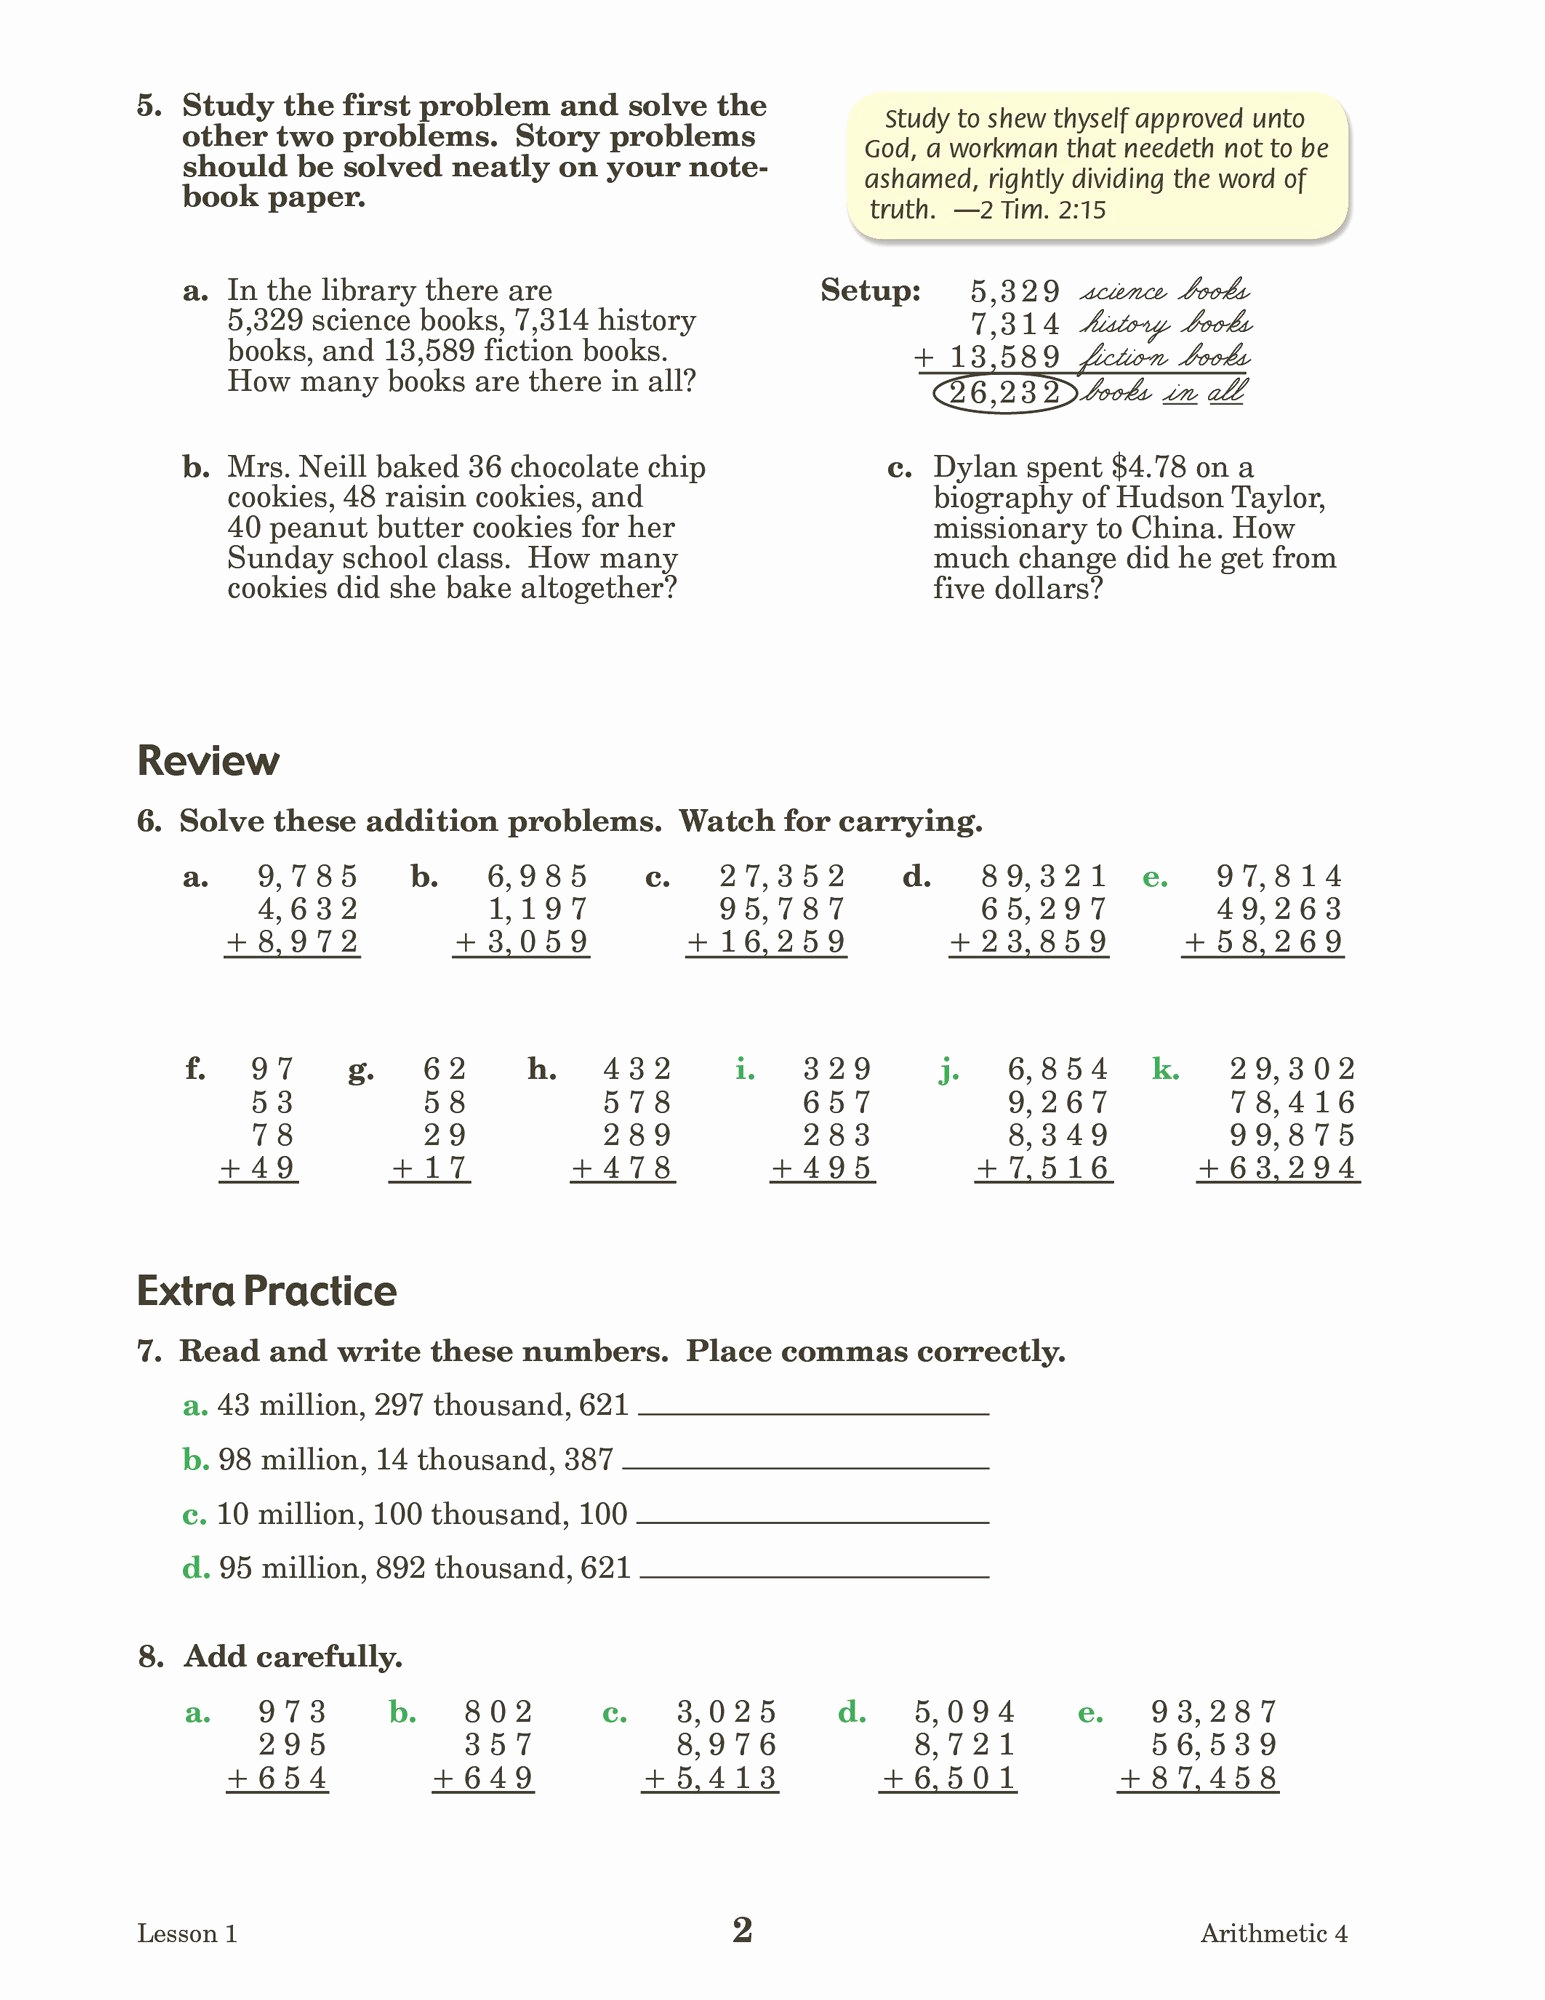 Free Printable Abeka Worksheets Lovely 20 Free Abeka Worksheets